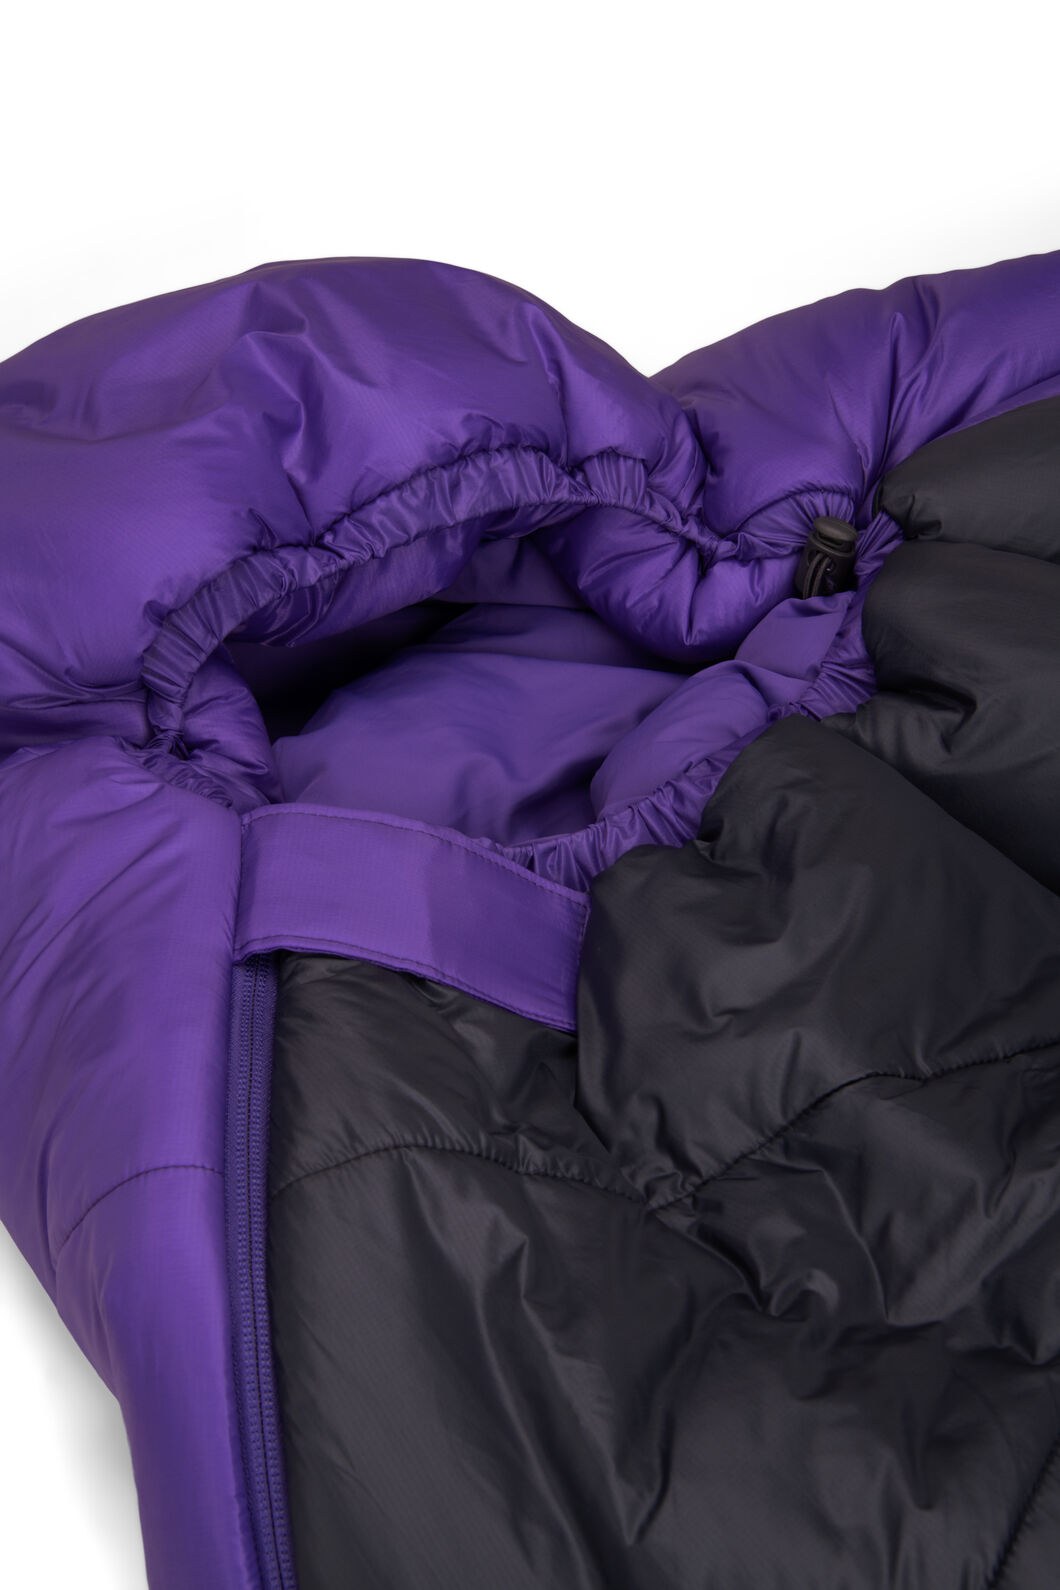 Macpac Standard Aspire 360 Synthetic Sleeping Bag (-10°C) | Macpac